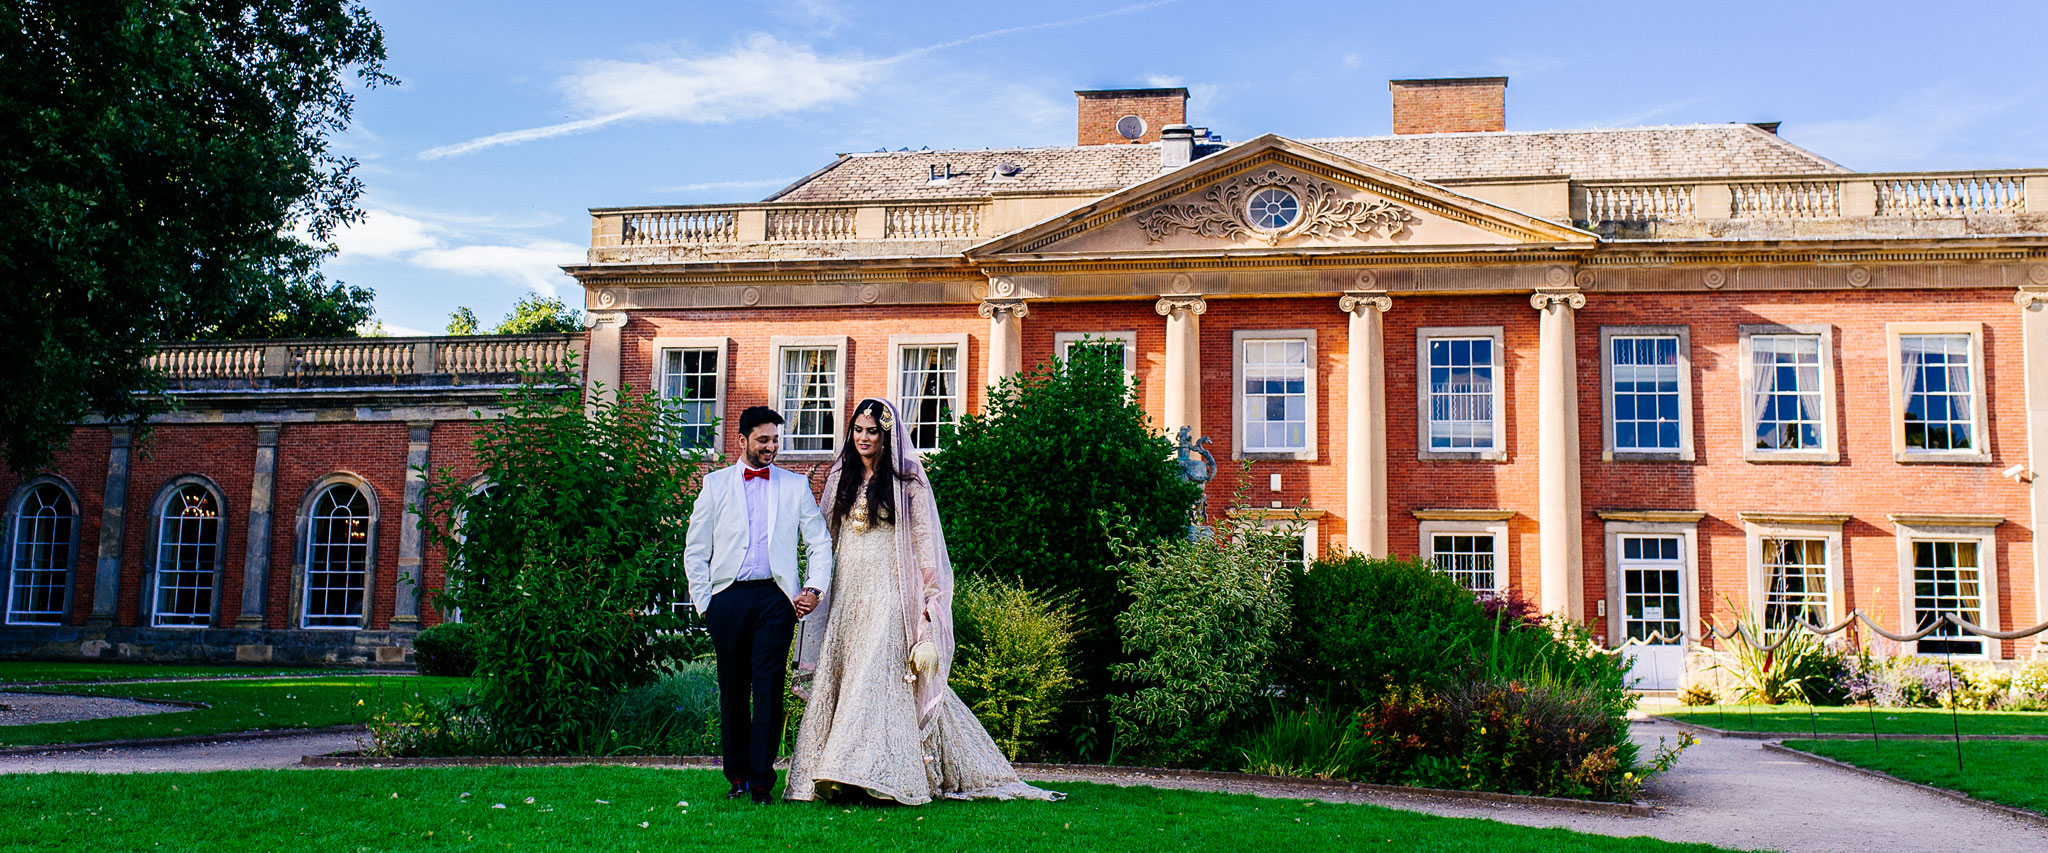 Colwick Hall Wedding – Yasmin and Tausif’s Wallima